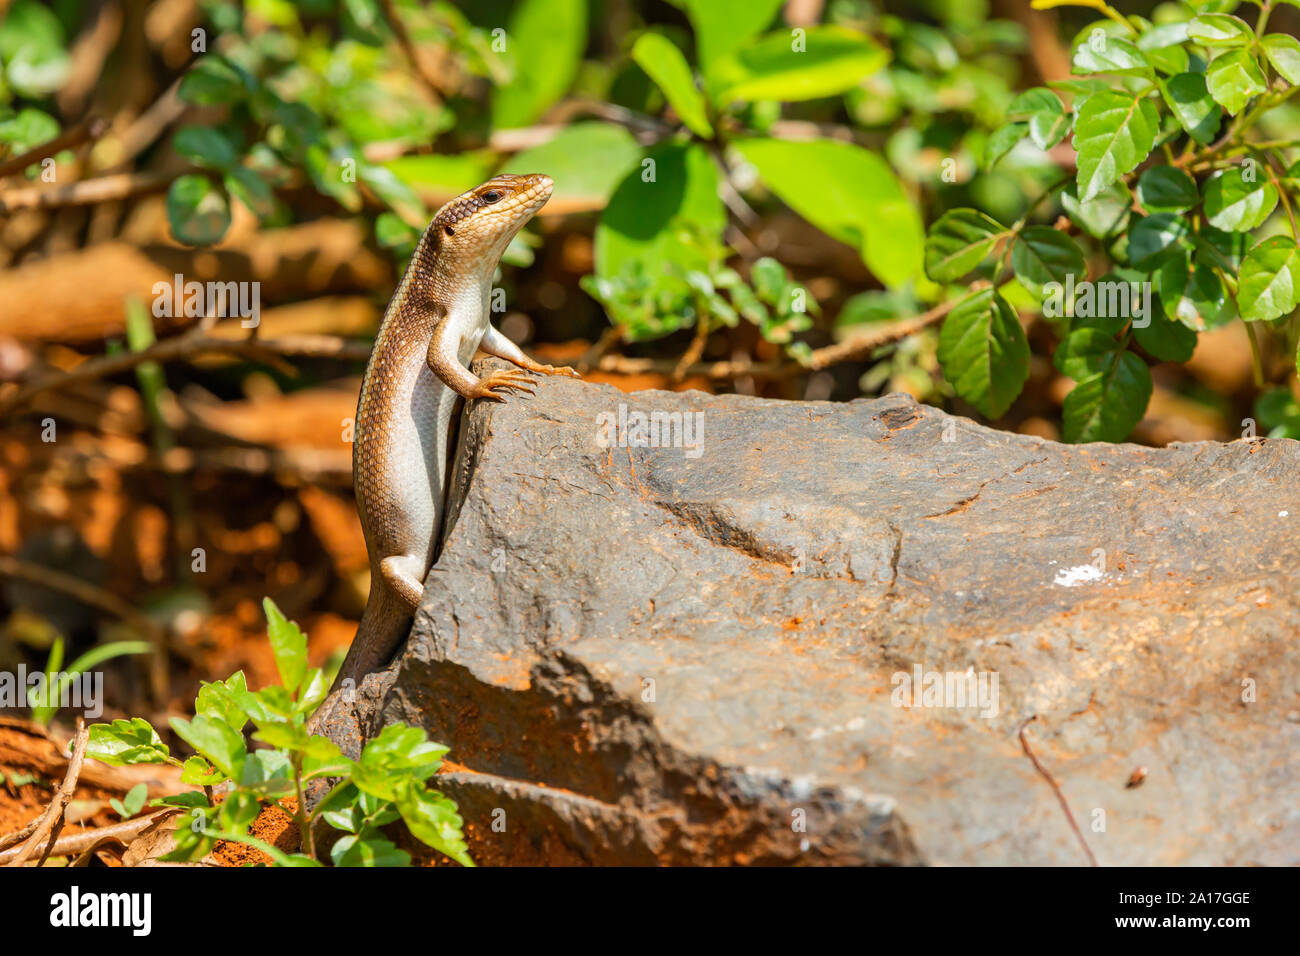 African striped skink (Trachylepis striata) crawling up side of rock, taken in Kenya. Stock Photo